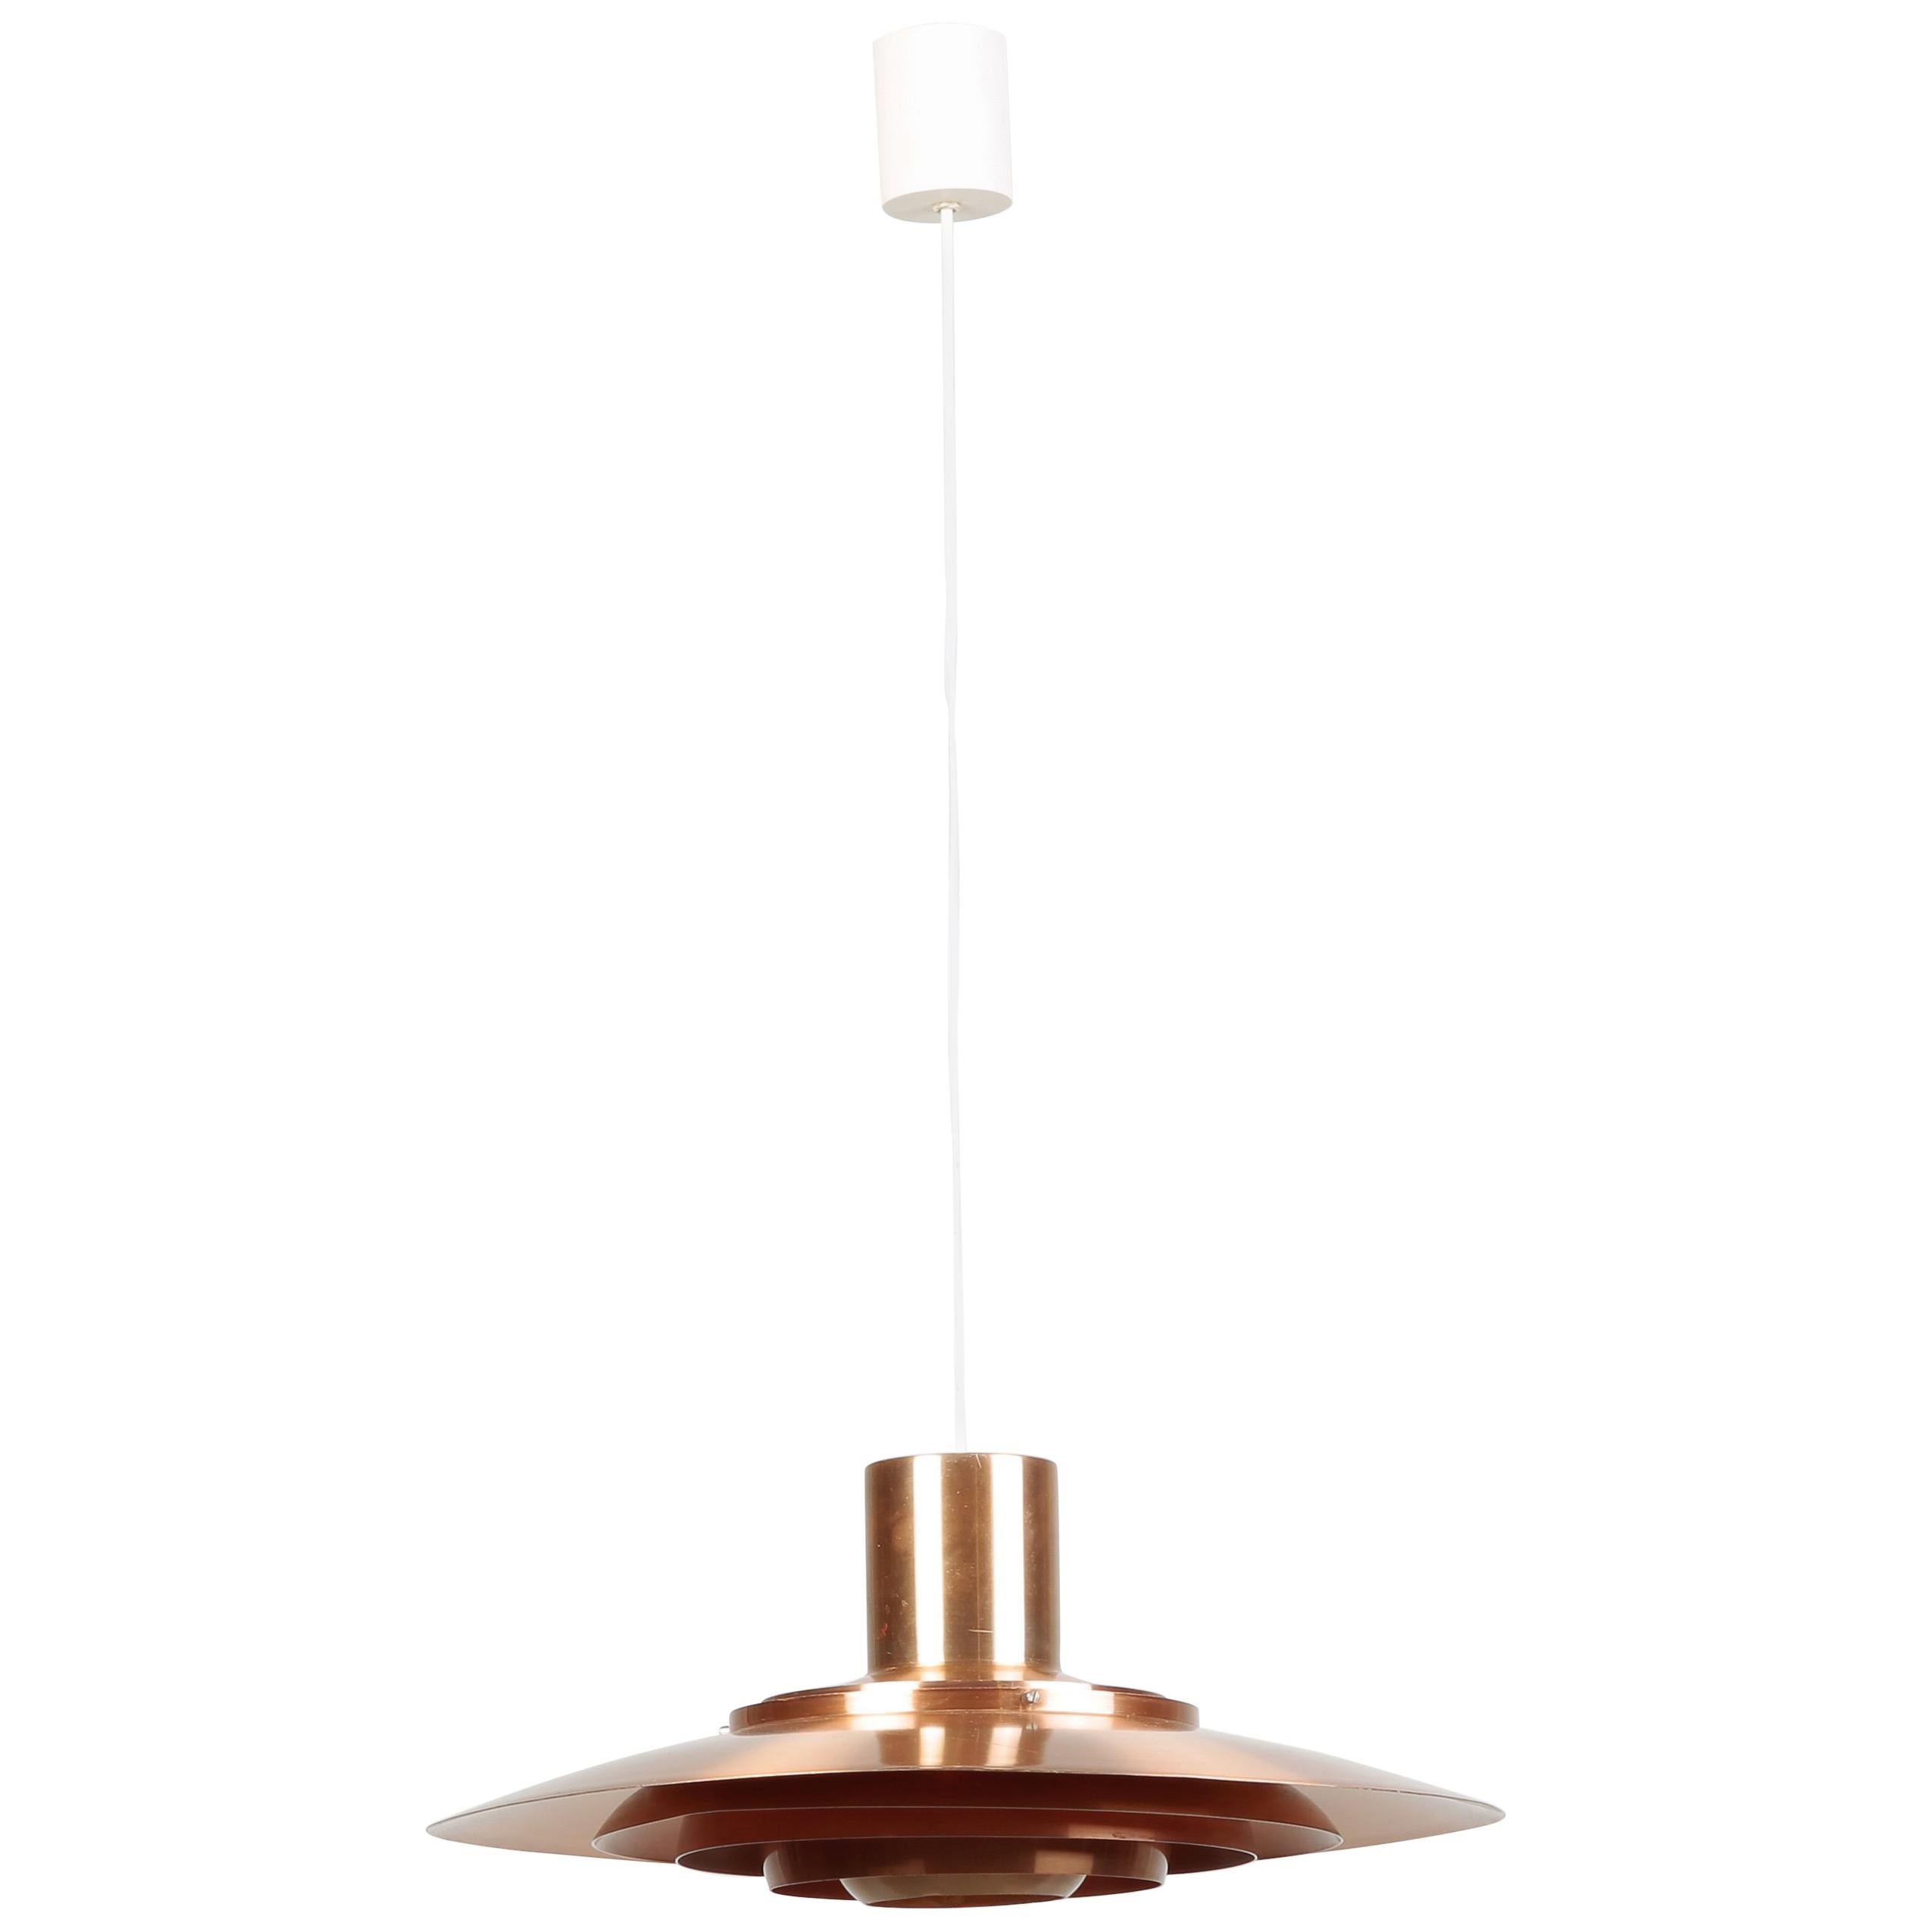 Fabricius & Kastholm Ceiling Lamp Copper P 376 For Sale